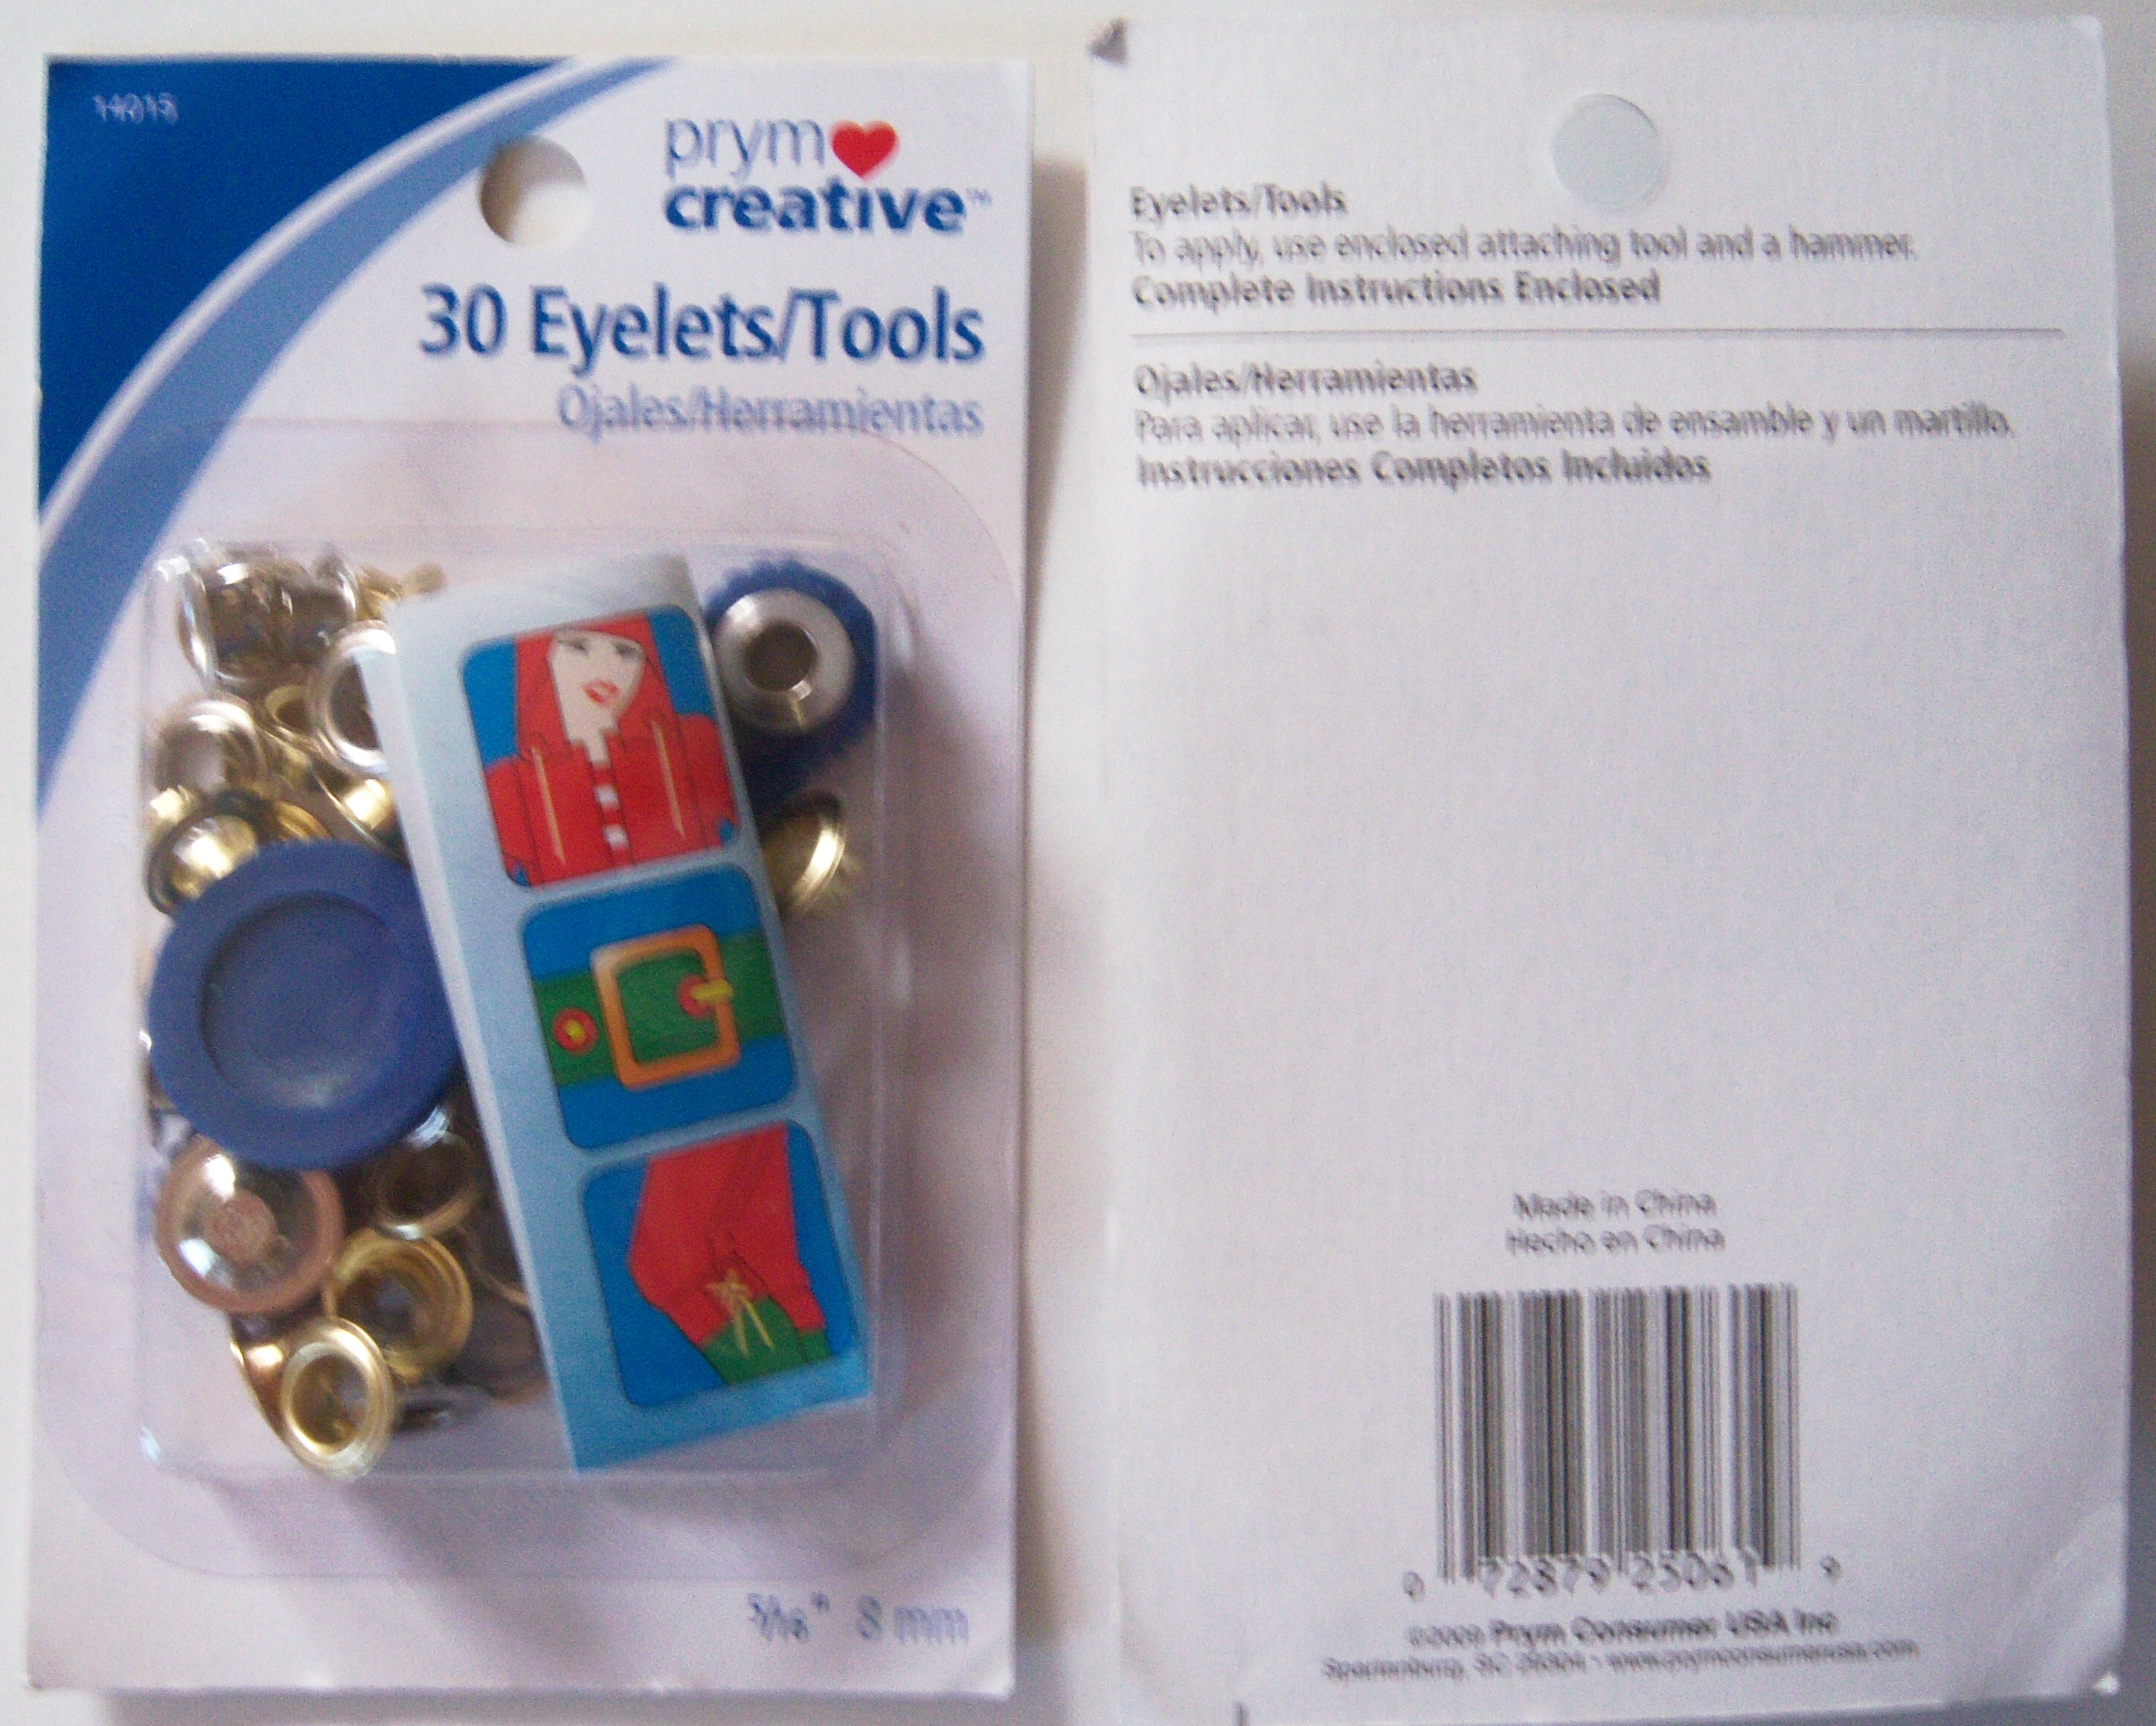 Prym Creative 30 Eyelets/Tools